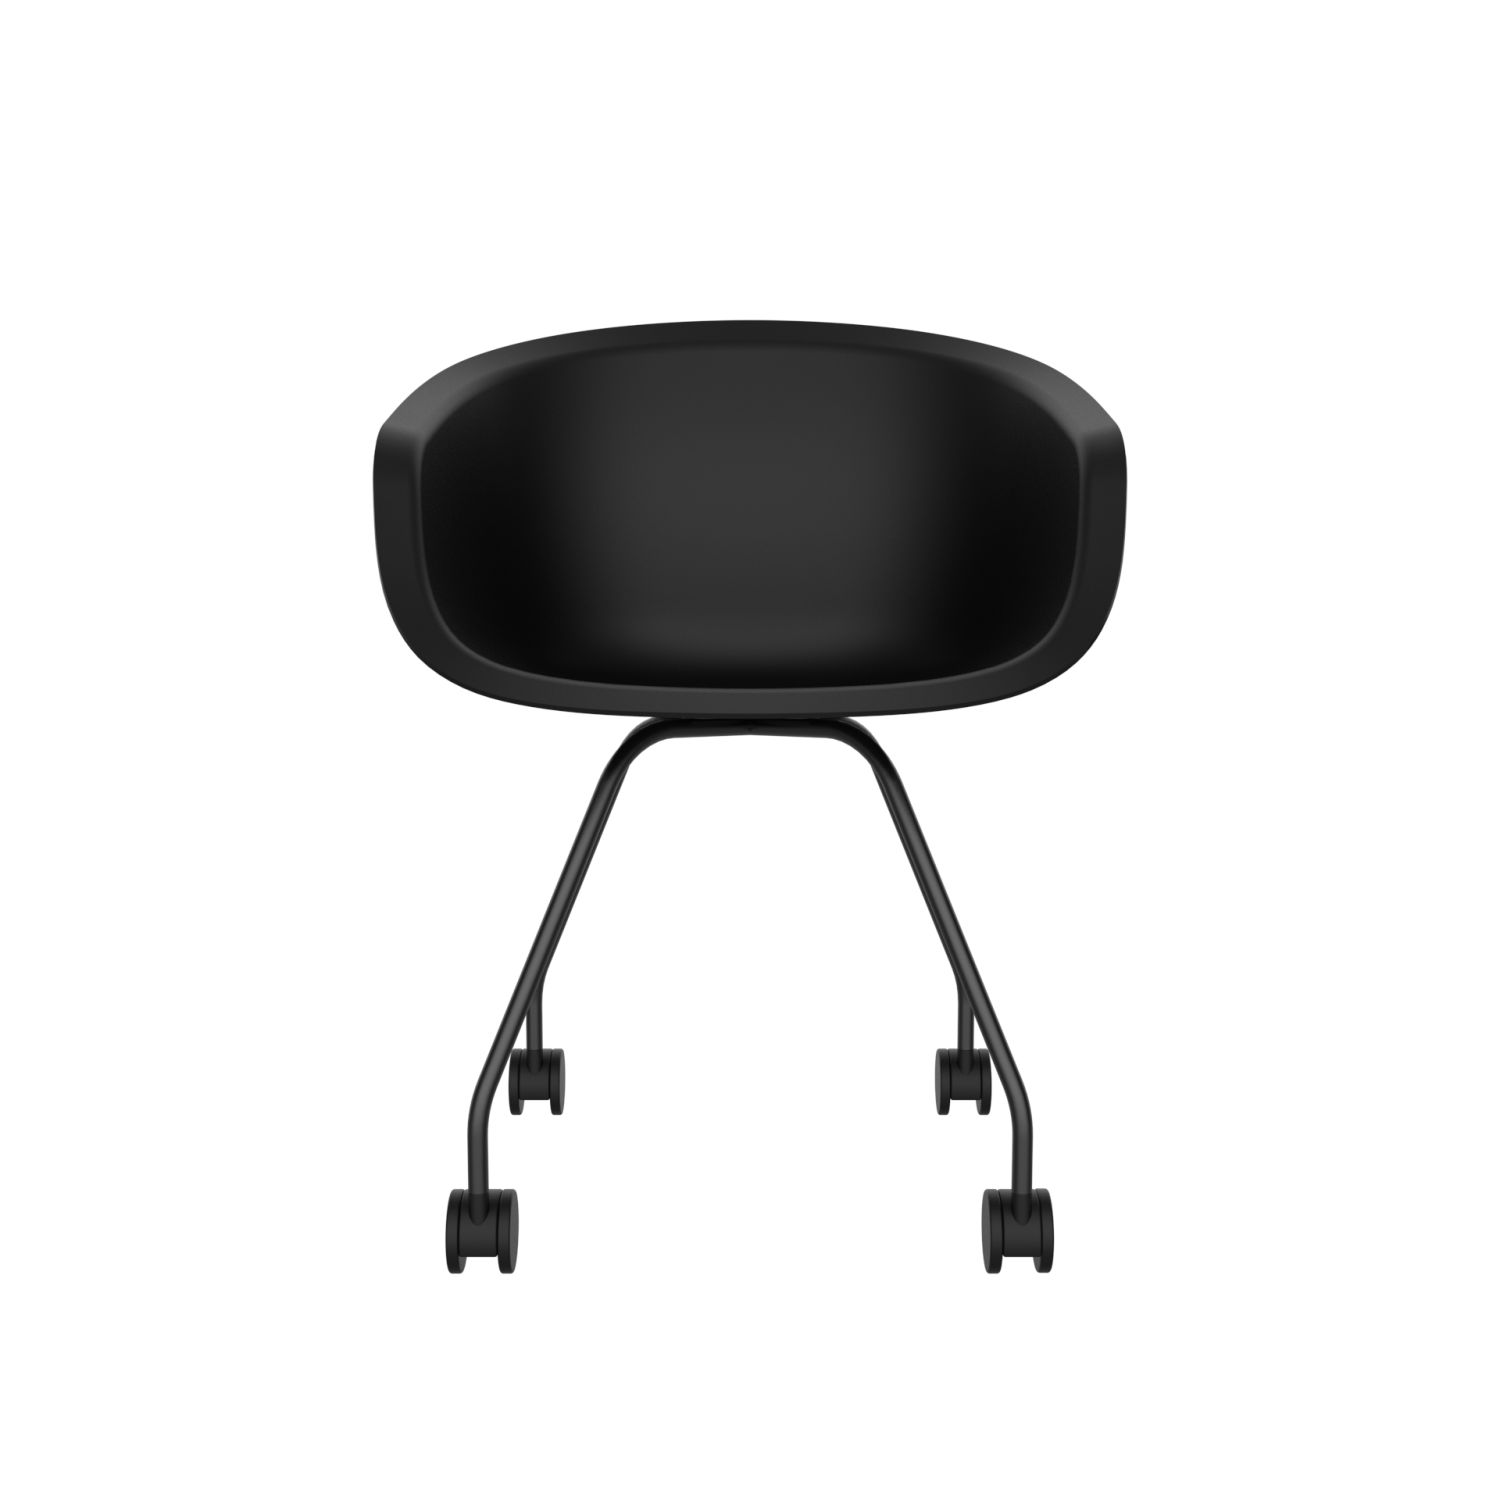 lensvelt richard hutten this bucket office chair steel base black ral9005 black ral9005 hard leg ends